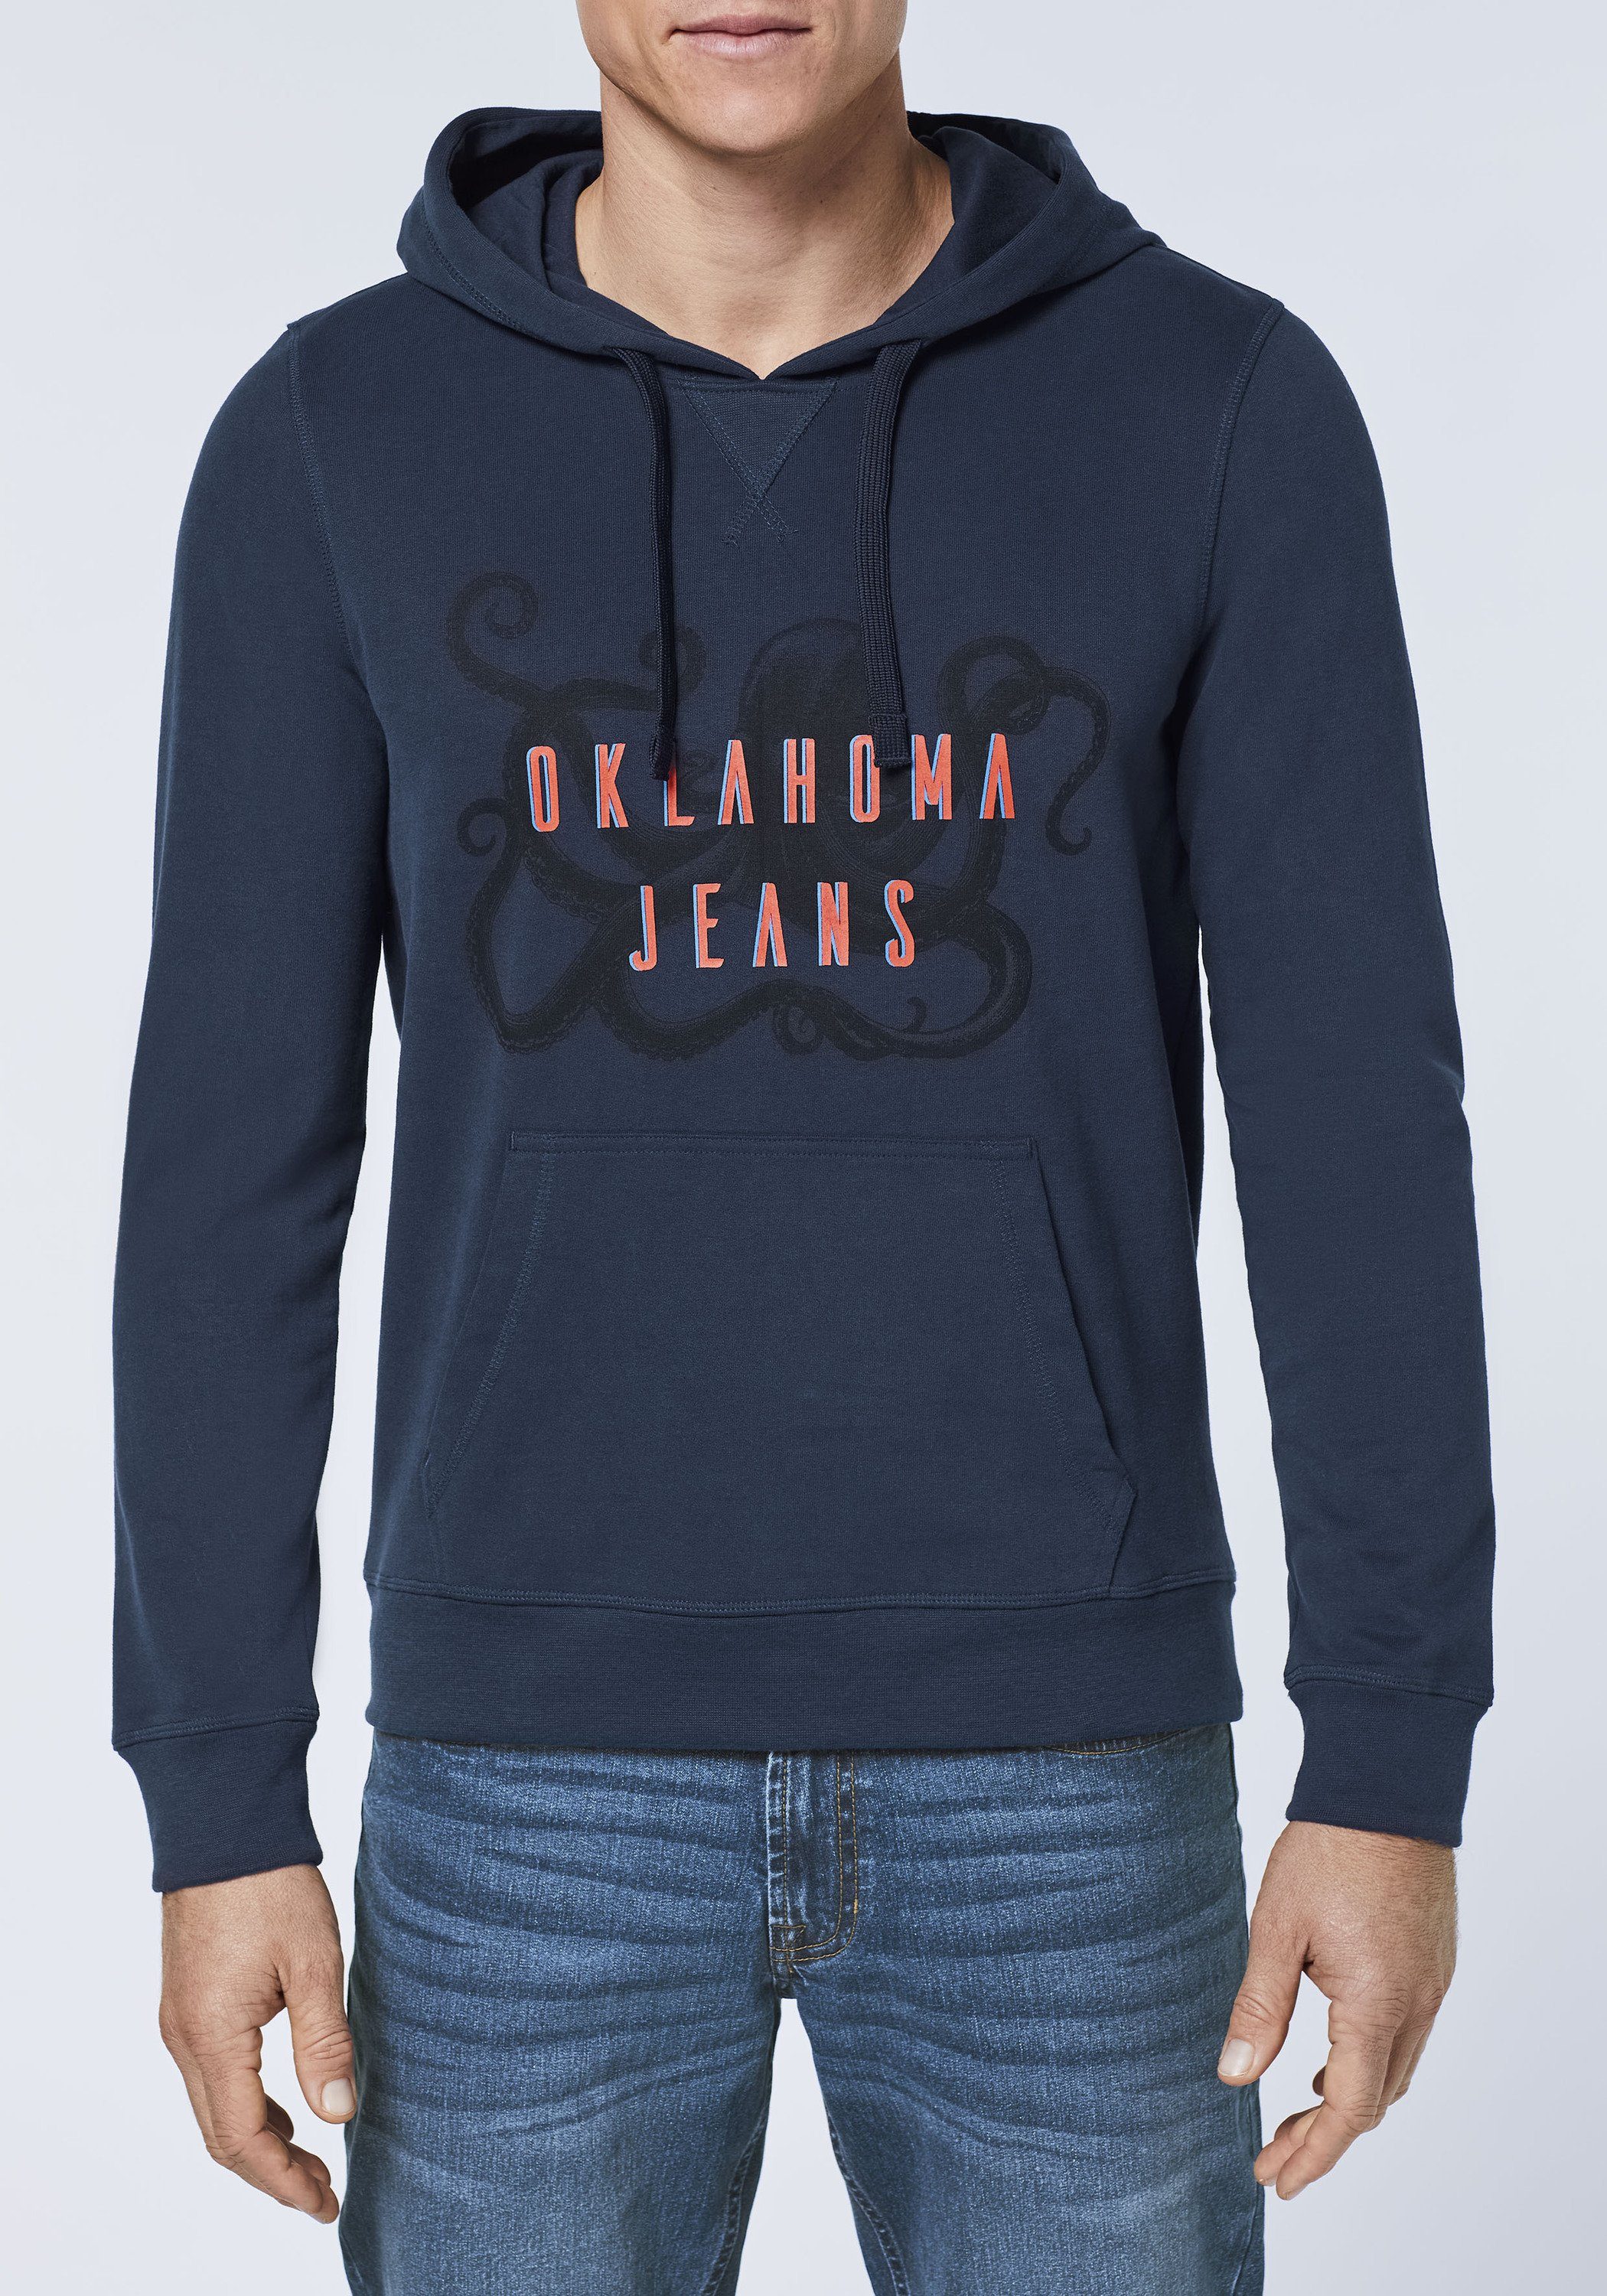 Oktopus-Motiv Jeans aus Navy Baumwollmix Oklahoma Kapuzensweatshirt Blazer 19-3923 mit